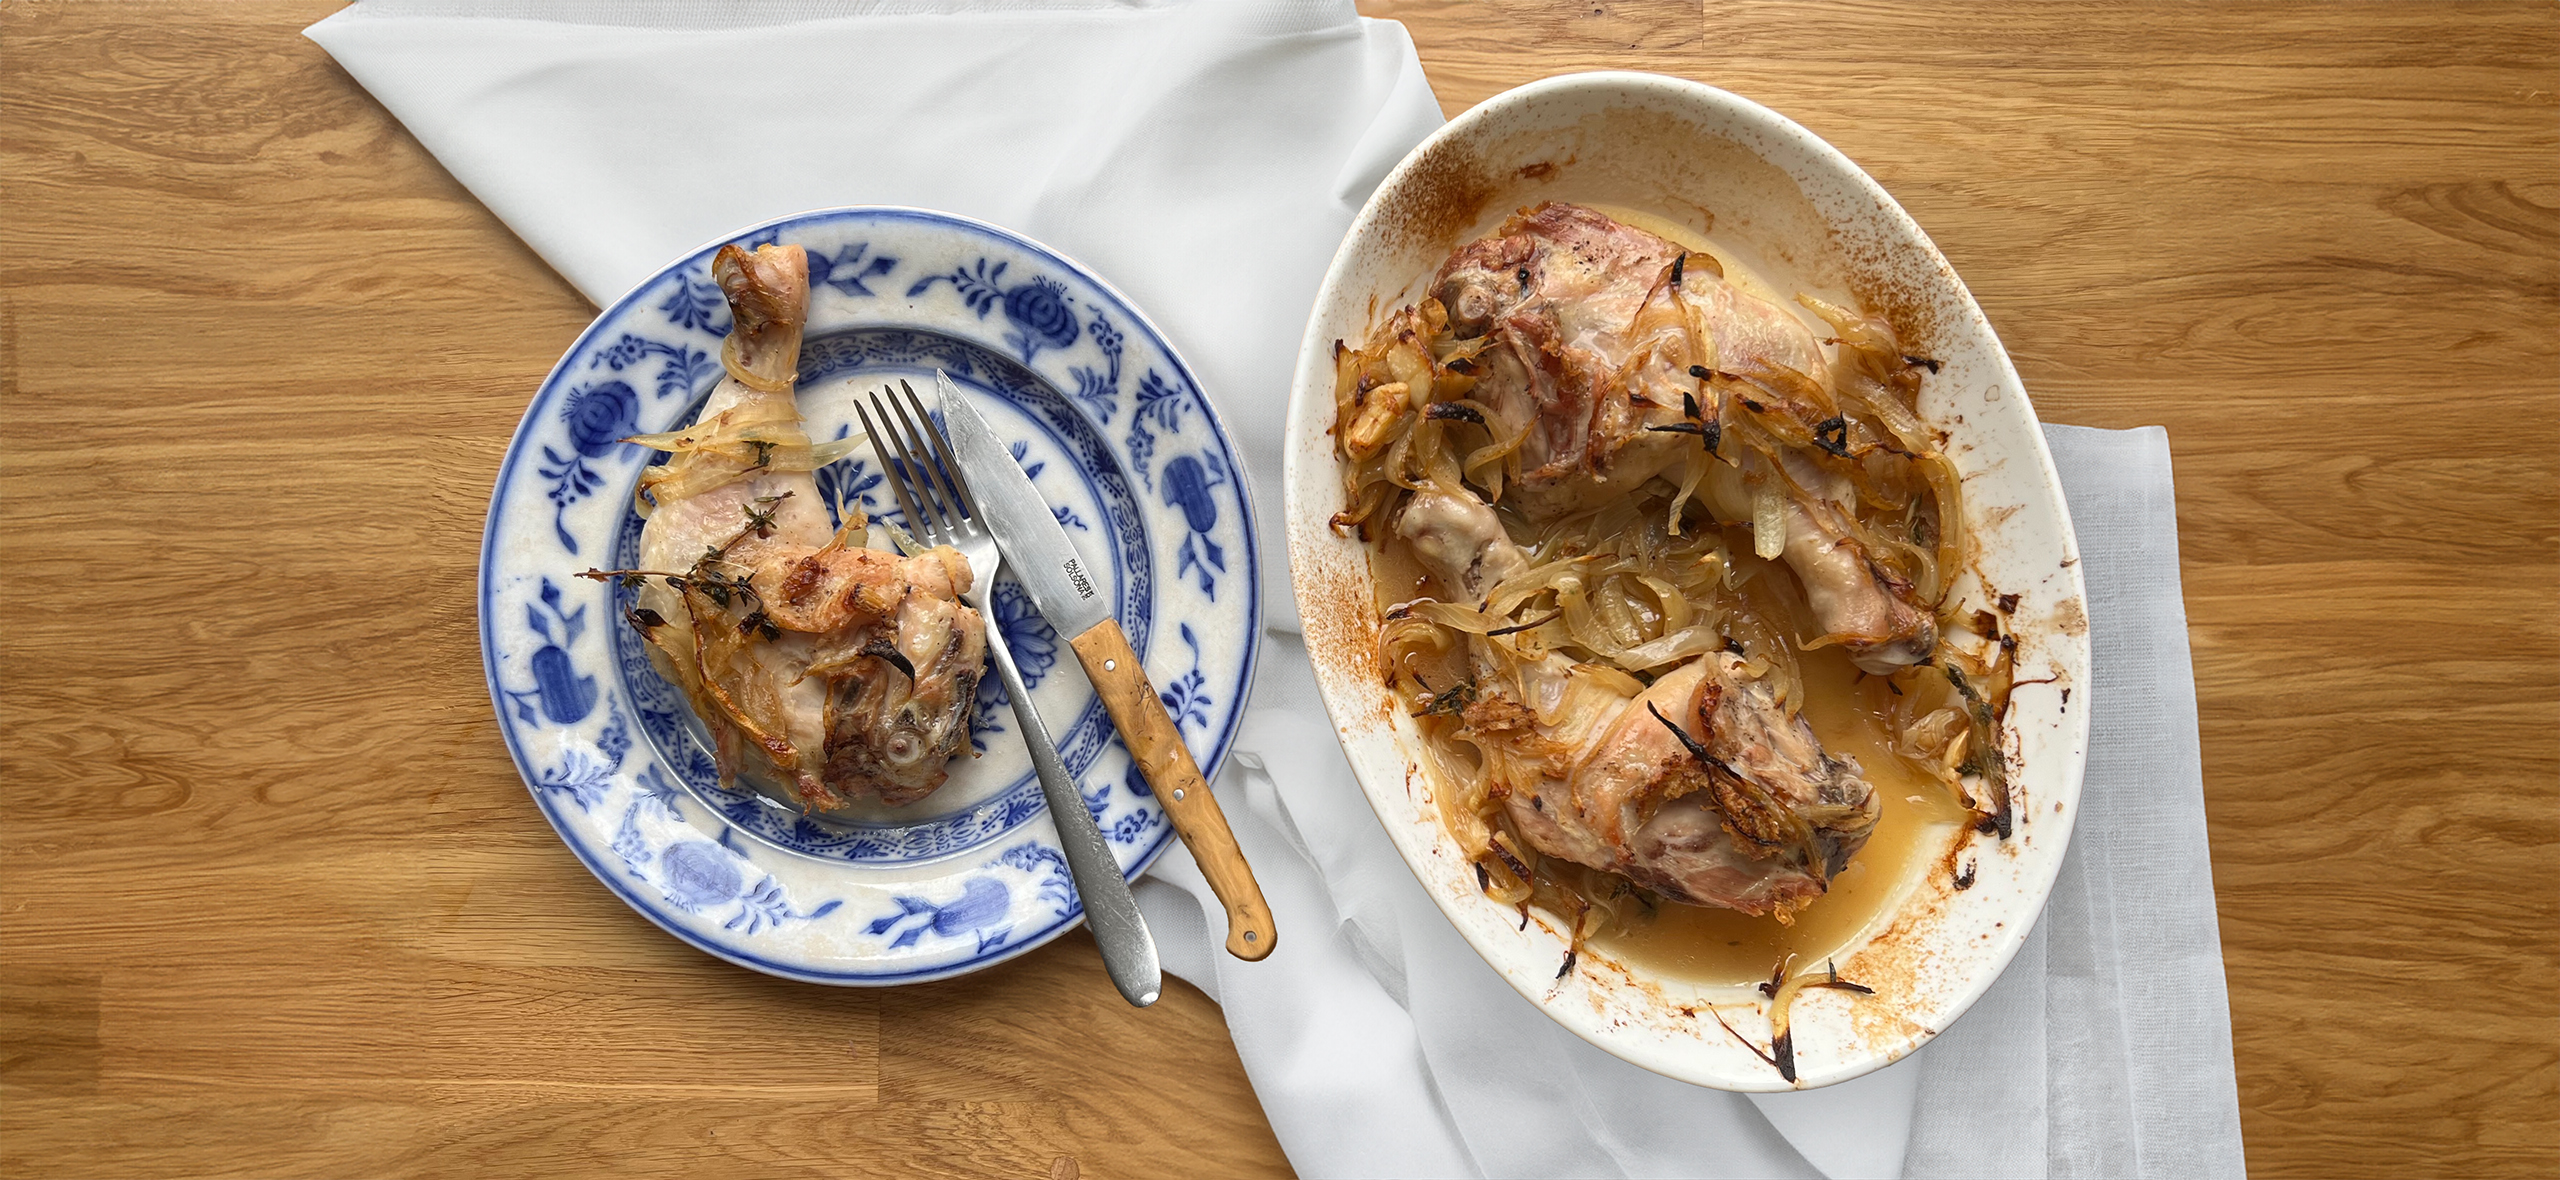 Курица на банке в духовке - пошаговый рецепт с фото на Готовим дома